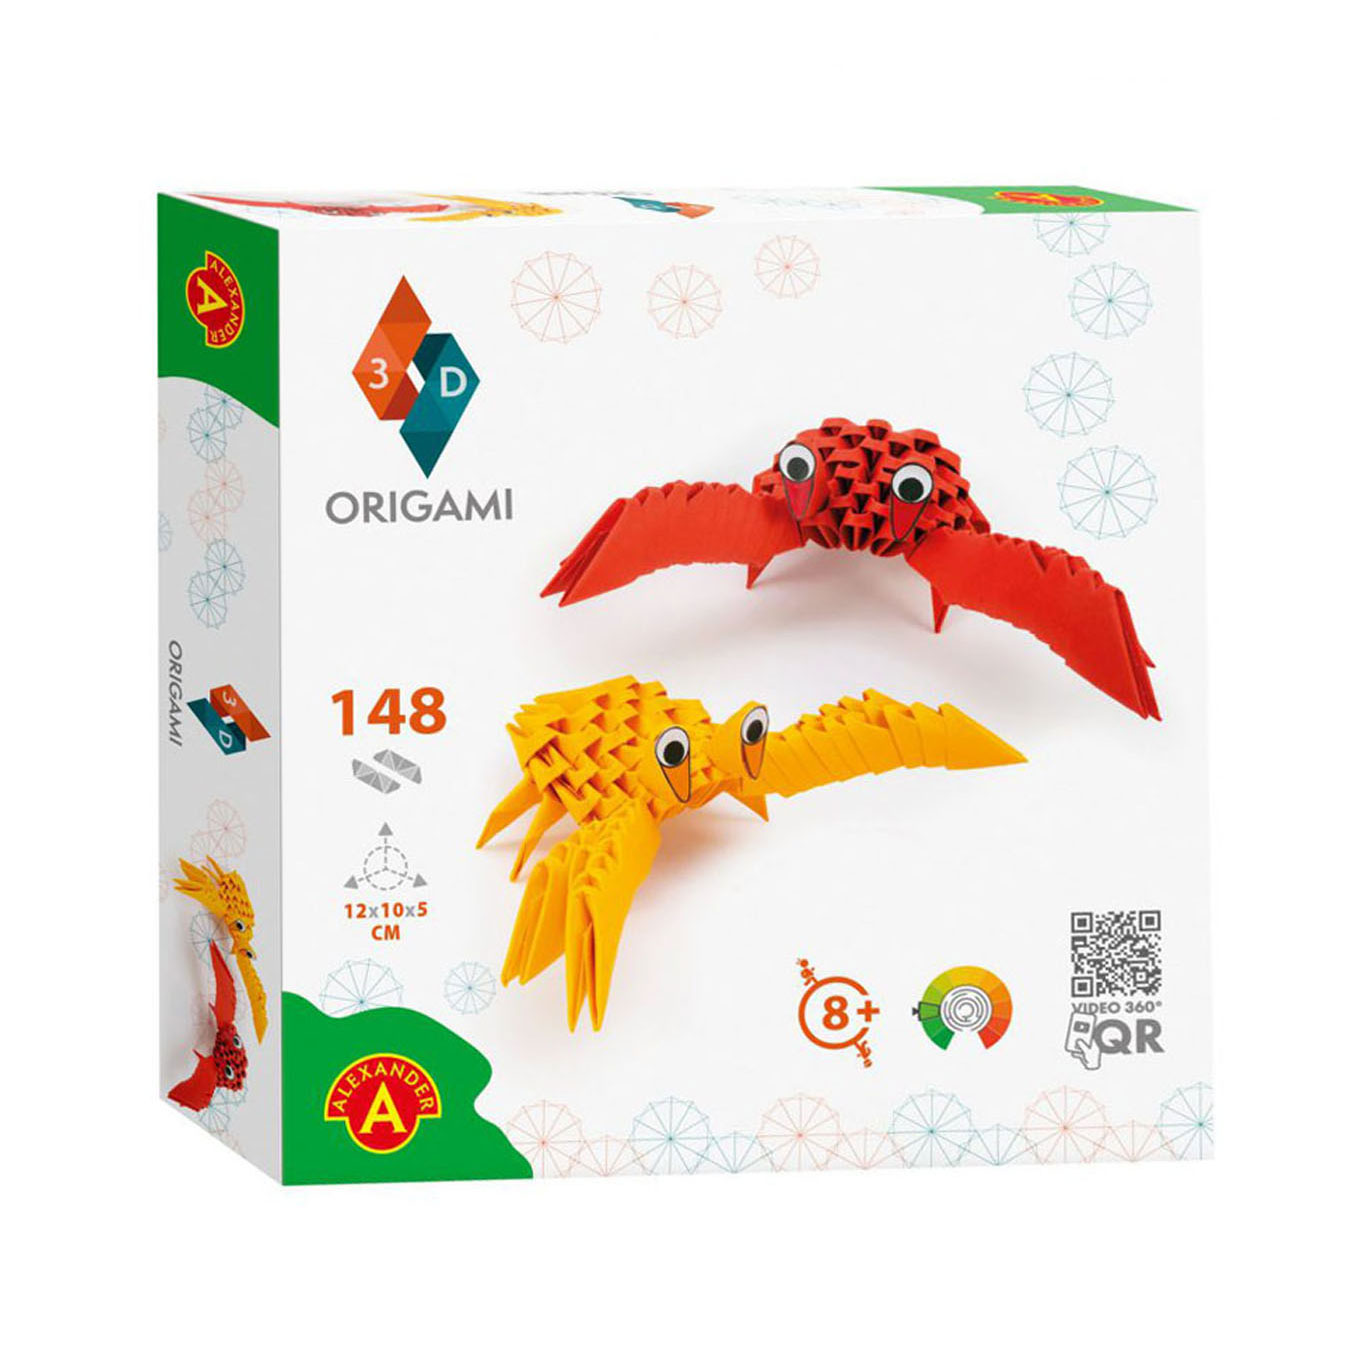 ORIGAMI 3D - Krabben, 148 Stück.